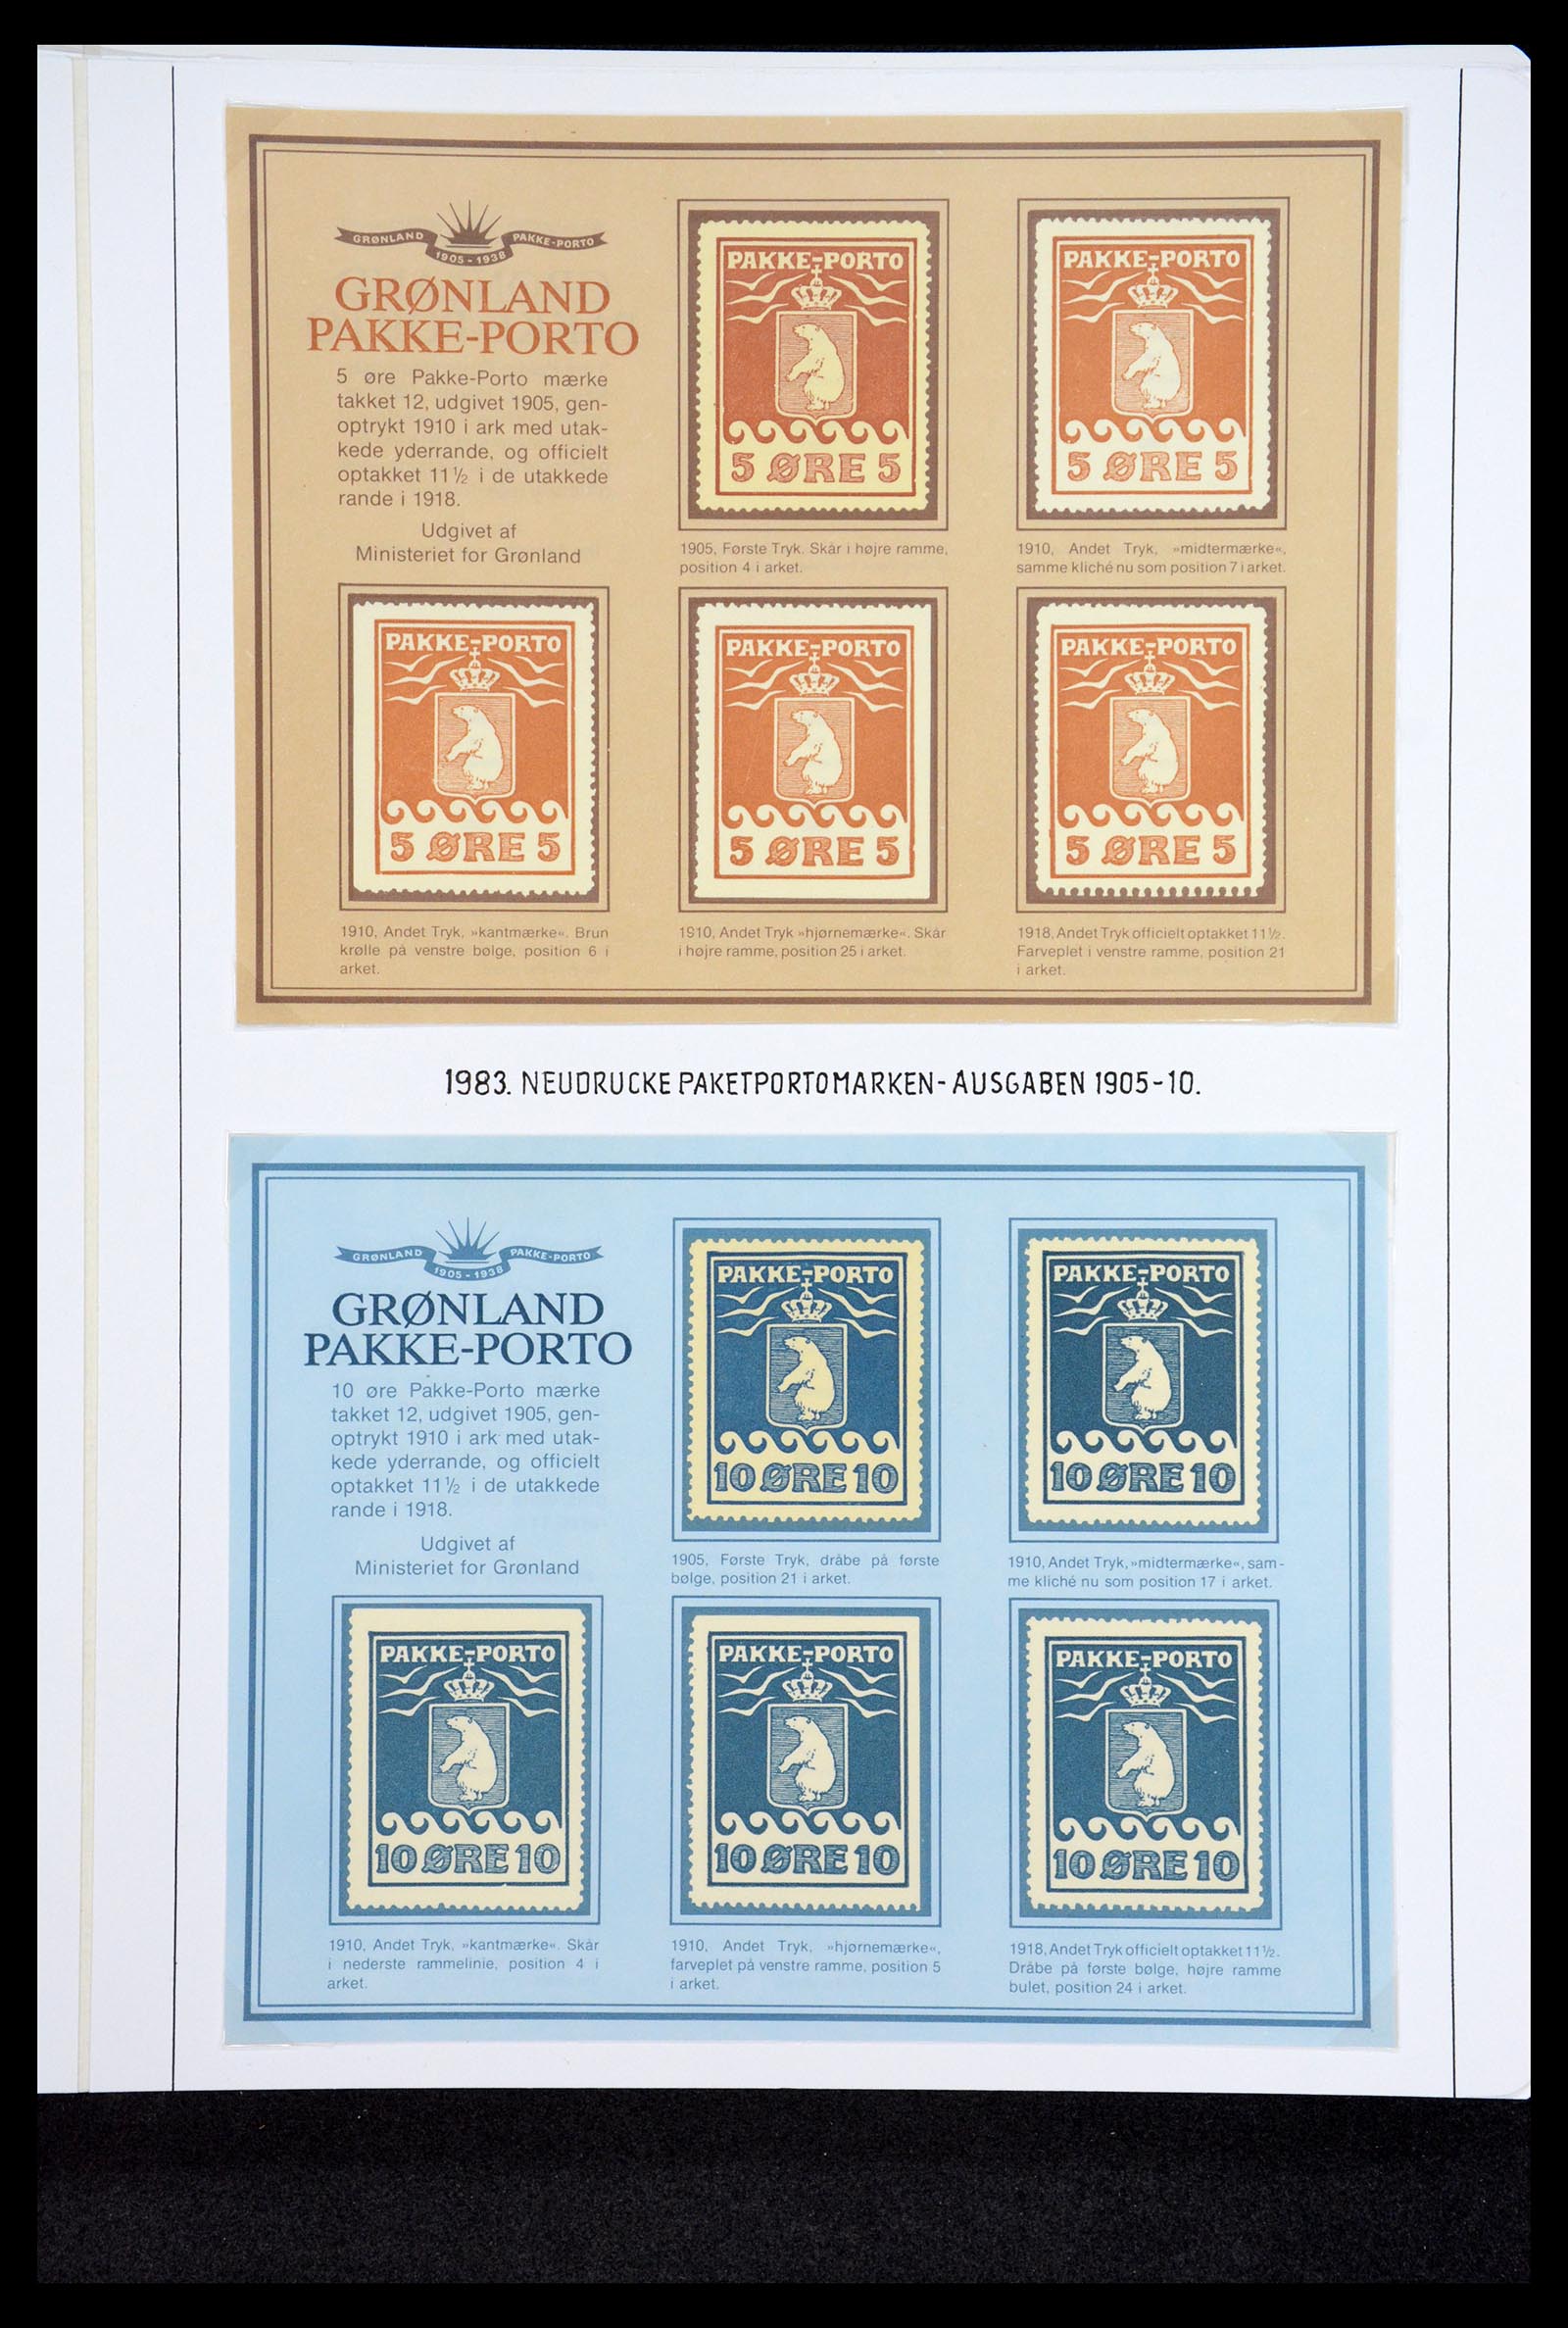 36748 010 - Postzegelverzameling 36748 Groenland pakke-porto 1905-1930.